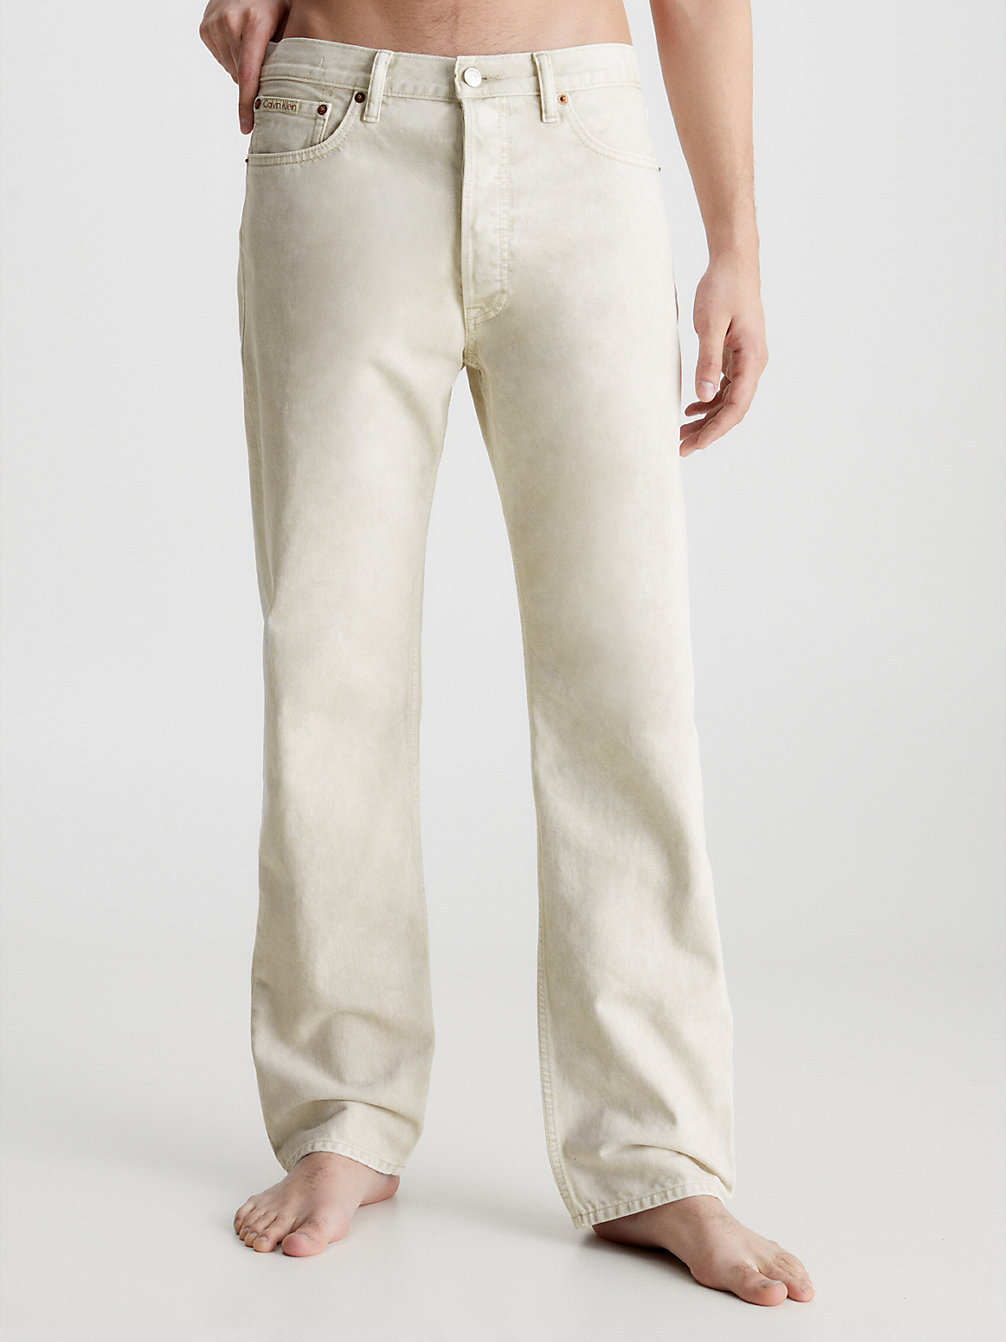 WHITE Unisex Classic Straight Jeans - CK Standards undefined men Calvin Klein